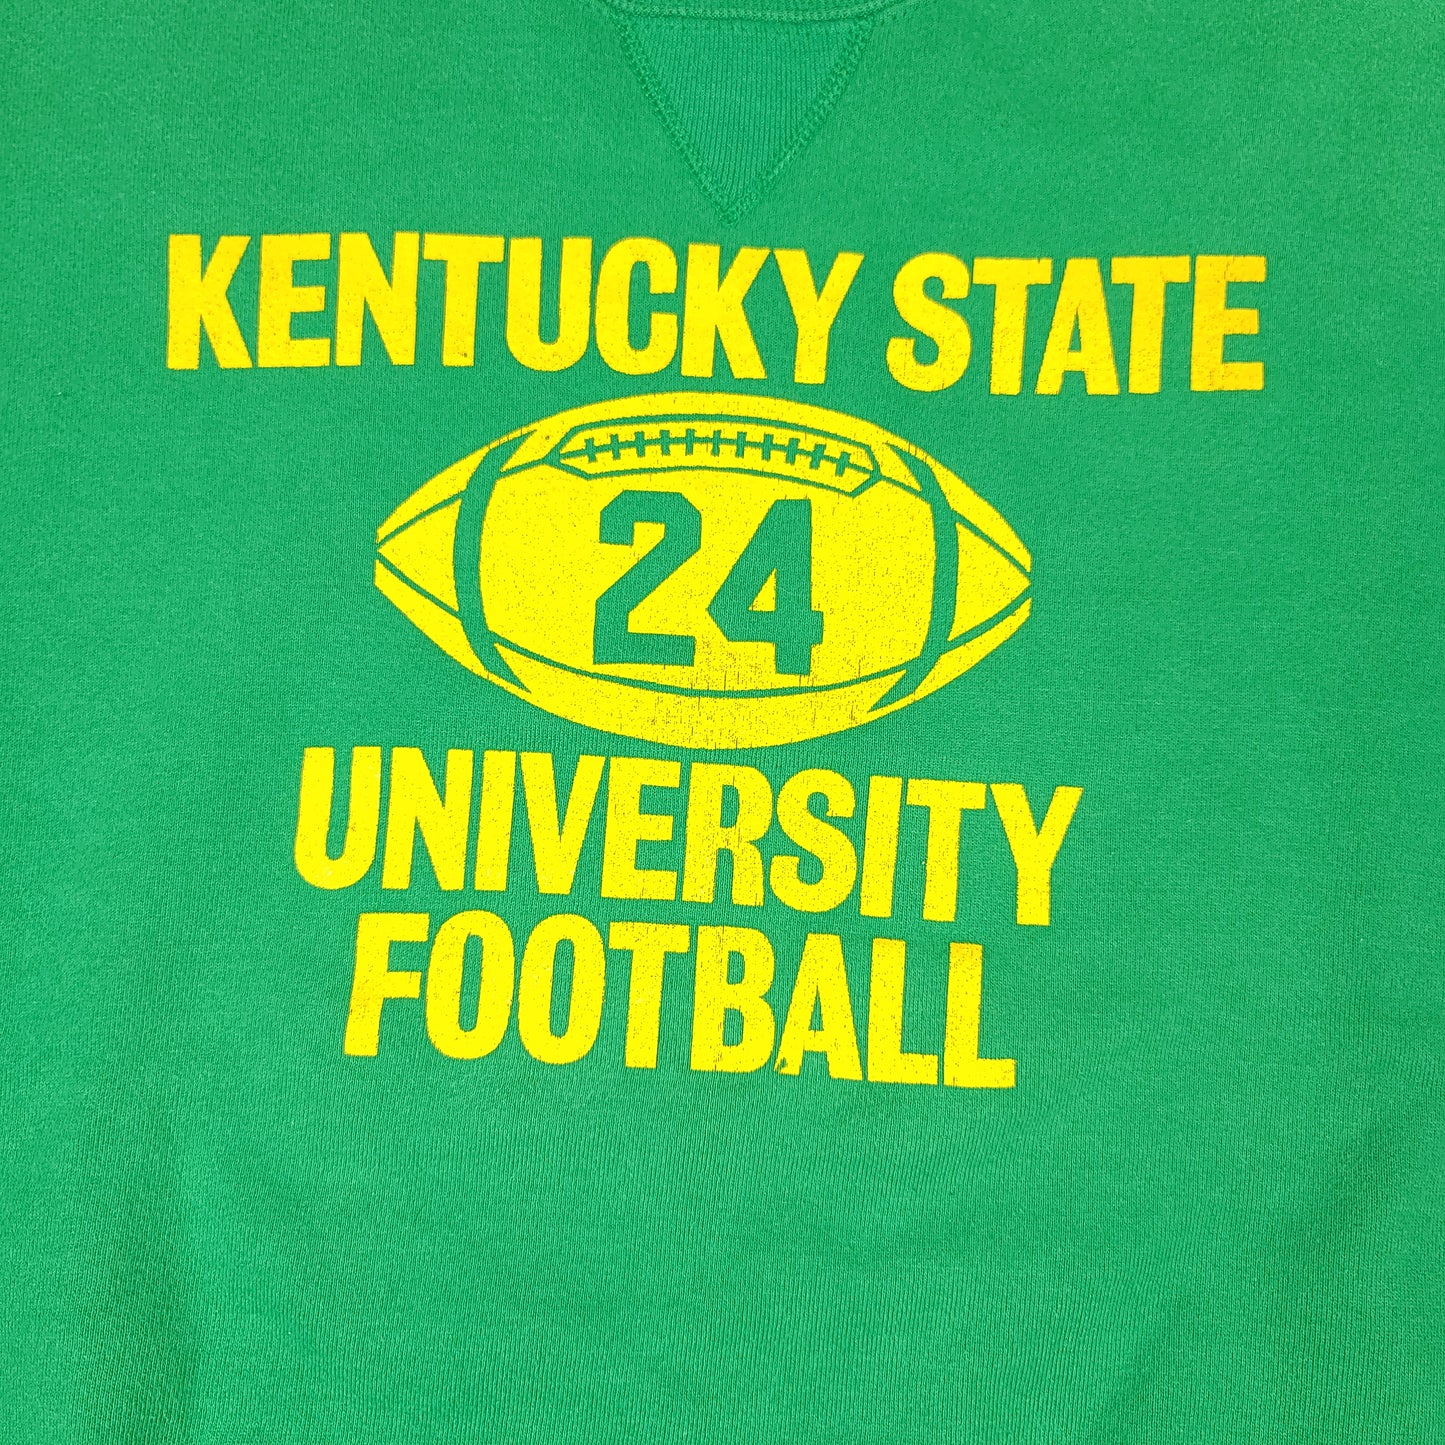 Vintage Kentucky State University Football Green Russell Athletic Sweatshirt